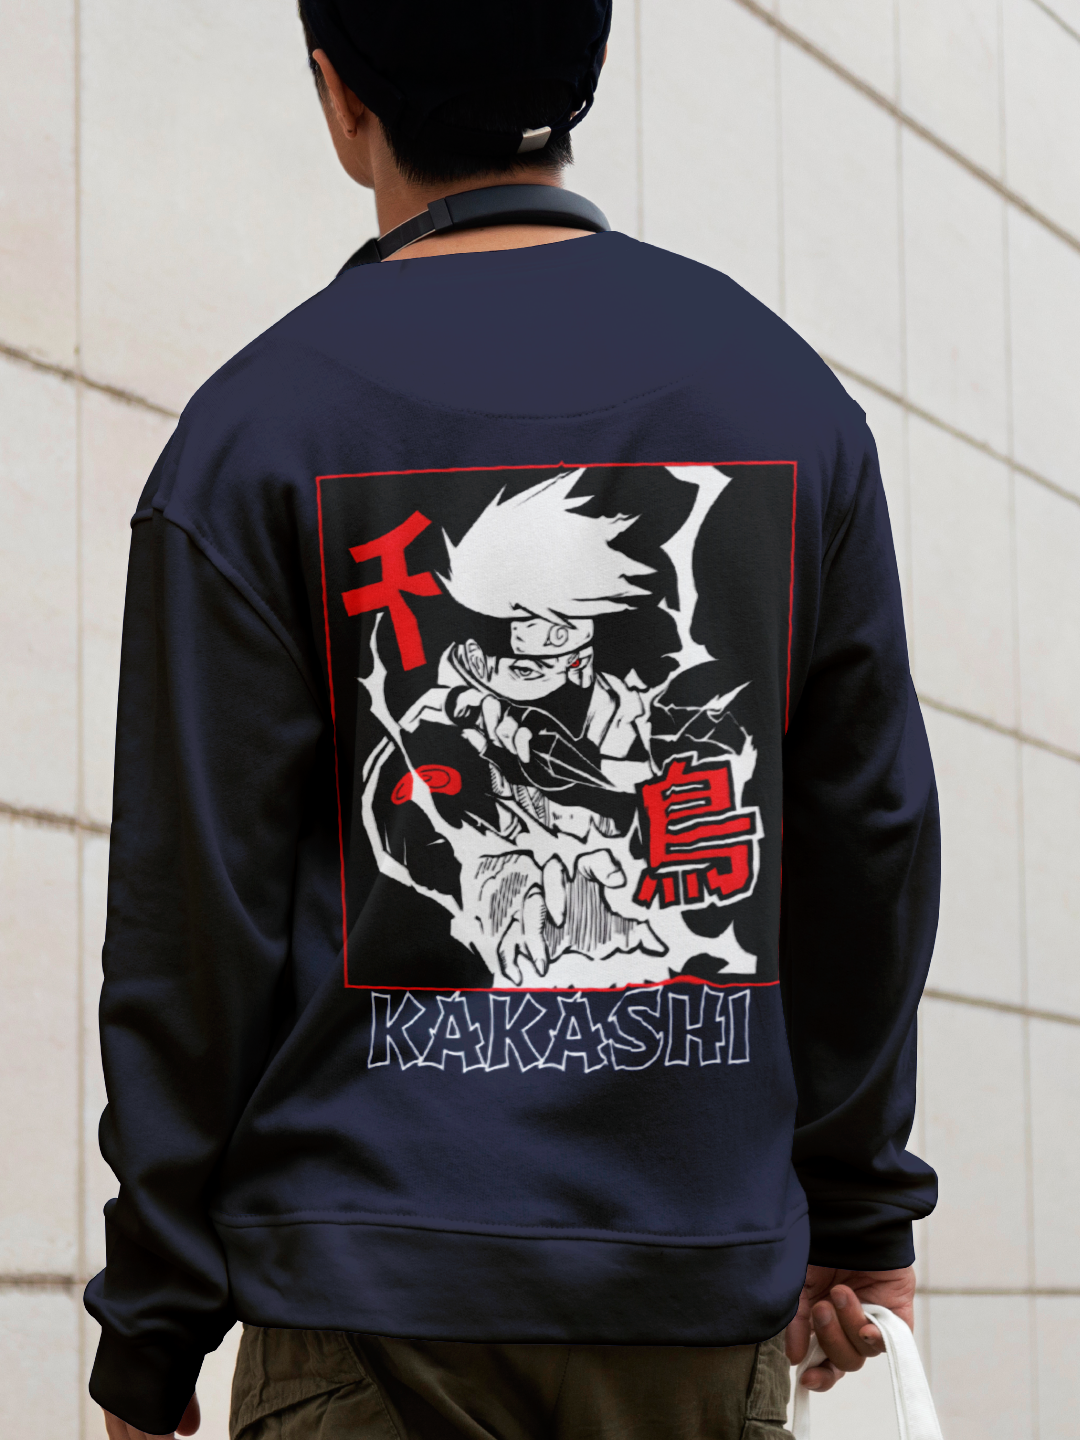 Naruto Shipudin Kakashi Edition Sweatshirt – Navy Blue Variant